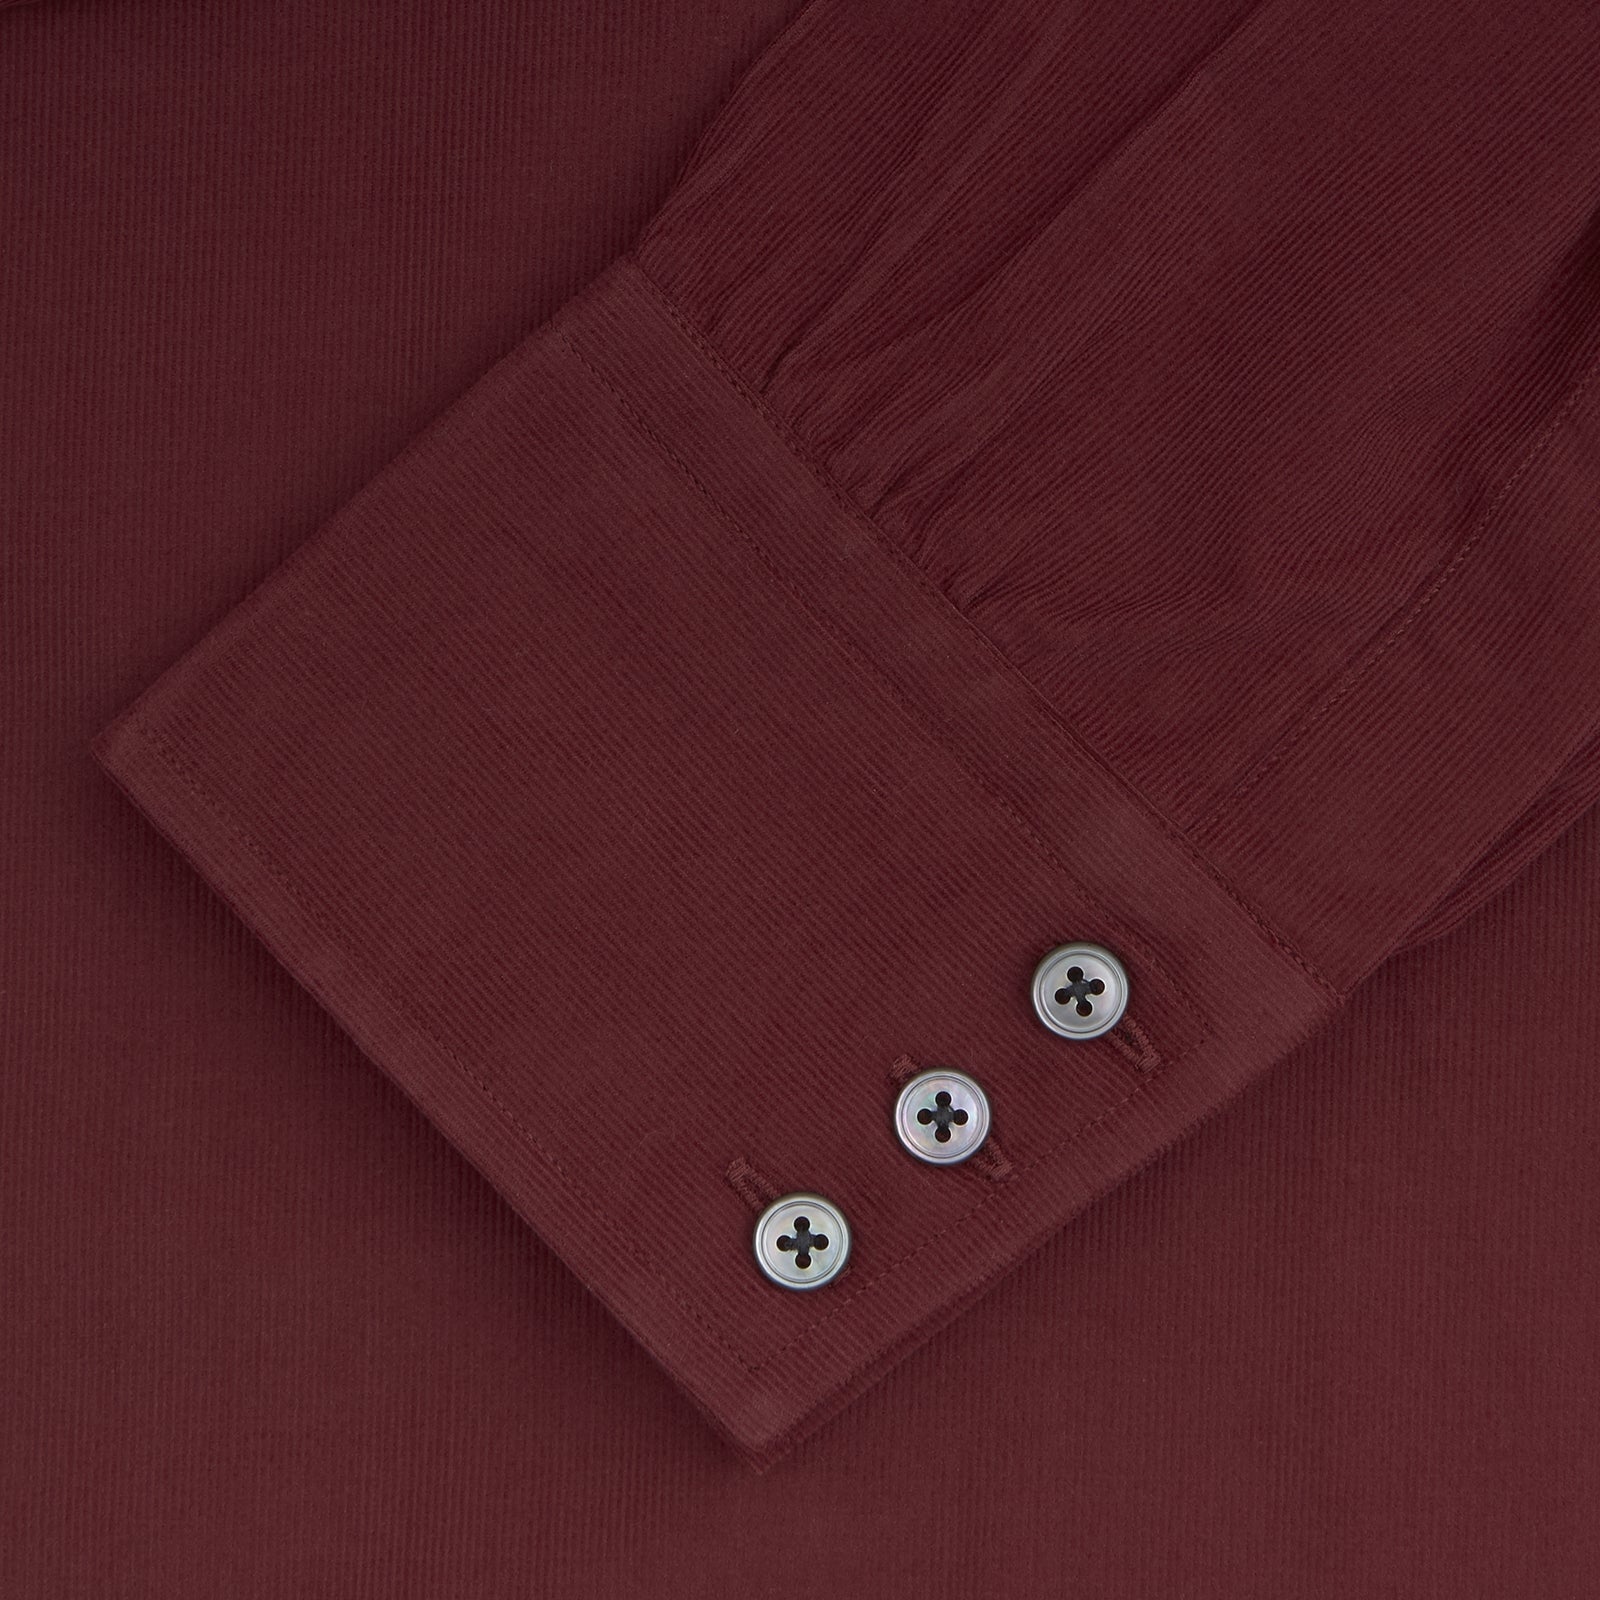 Burgundy Corduroy Cotton Shirt with Cambridge Collar and 3-Button Cuffs